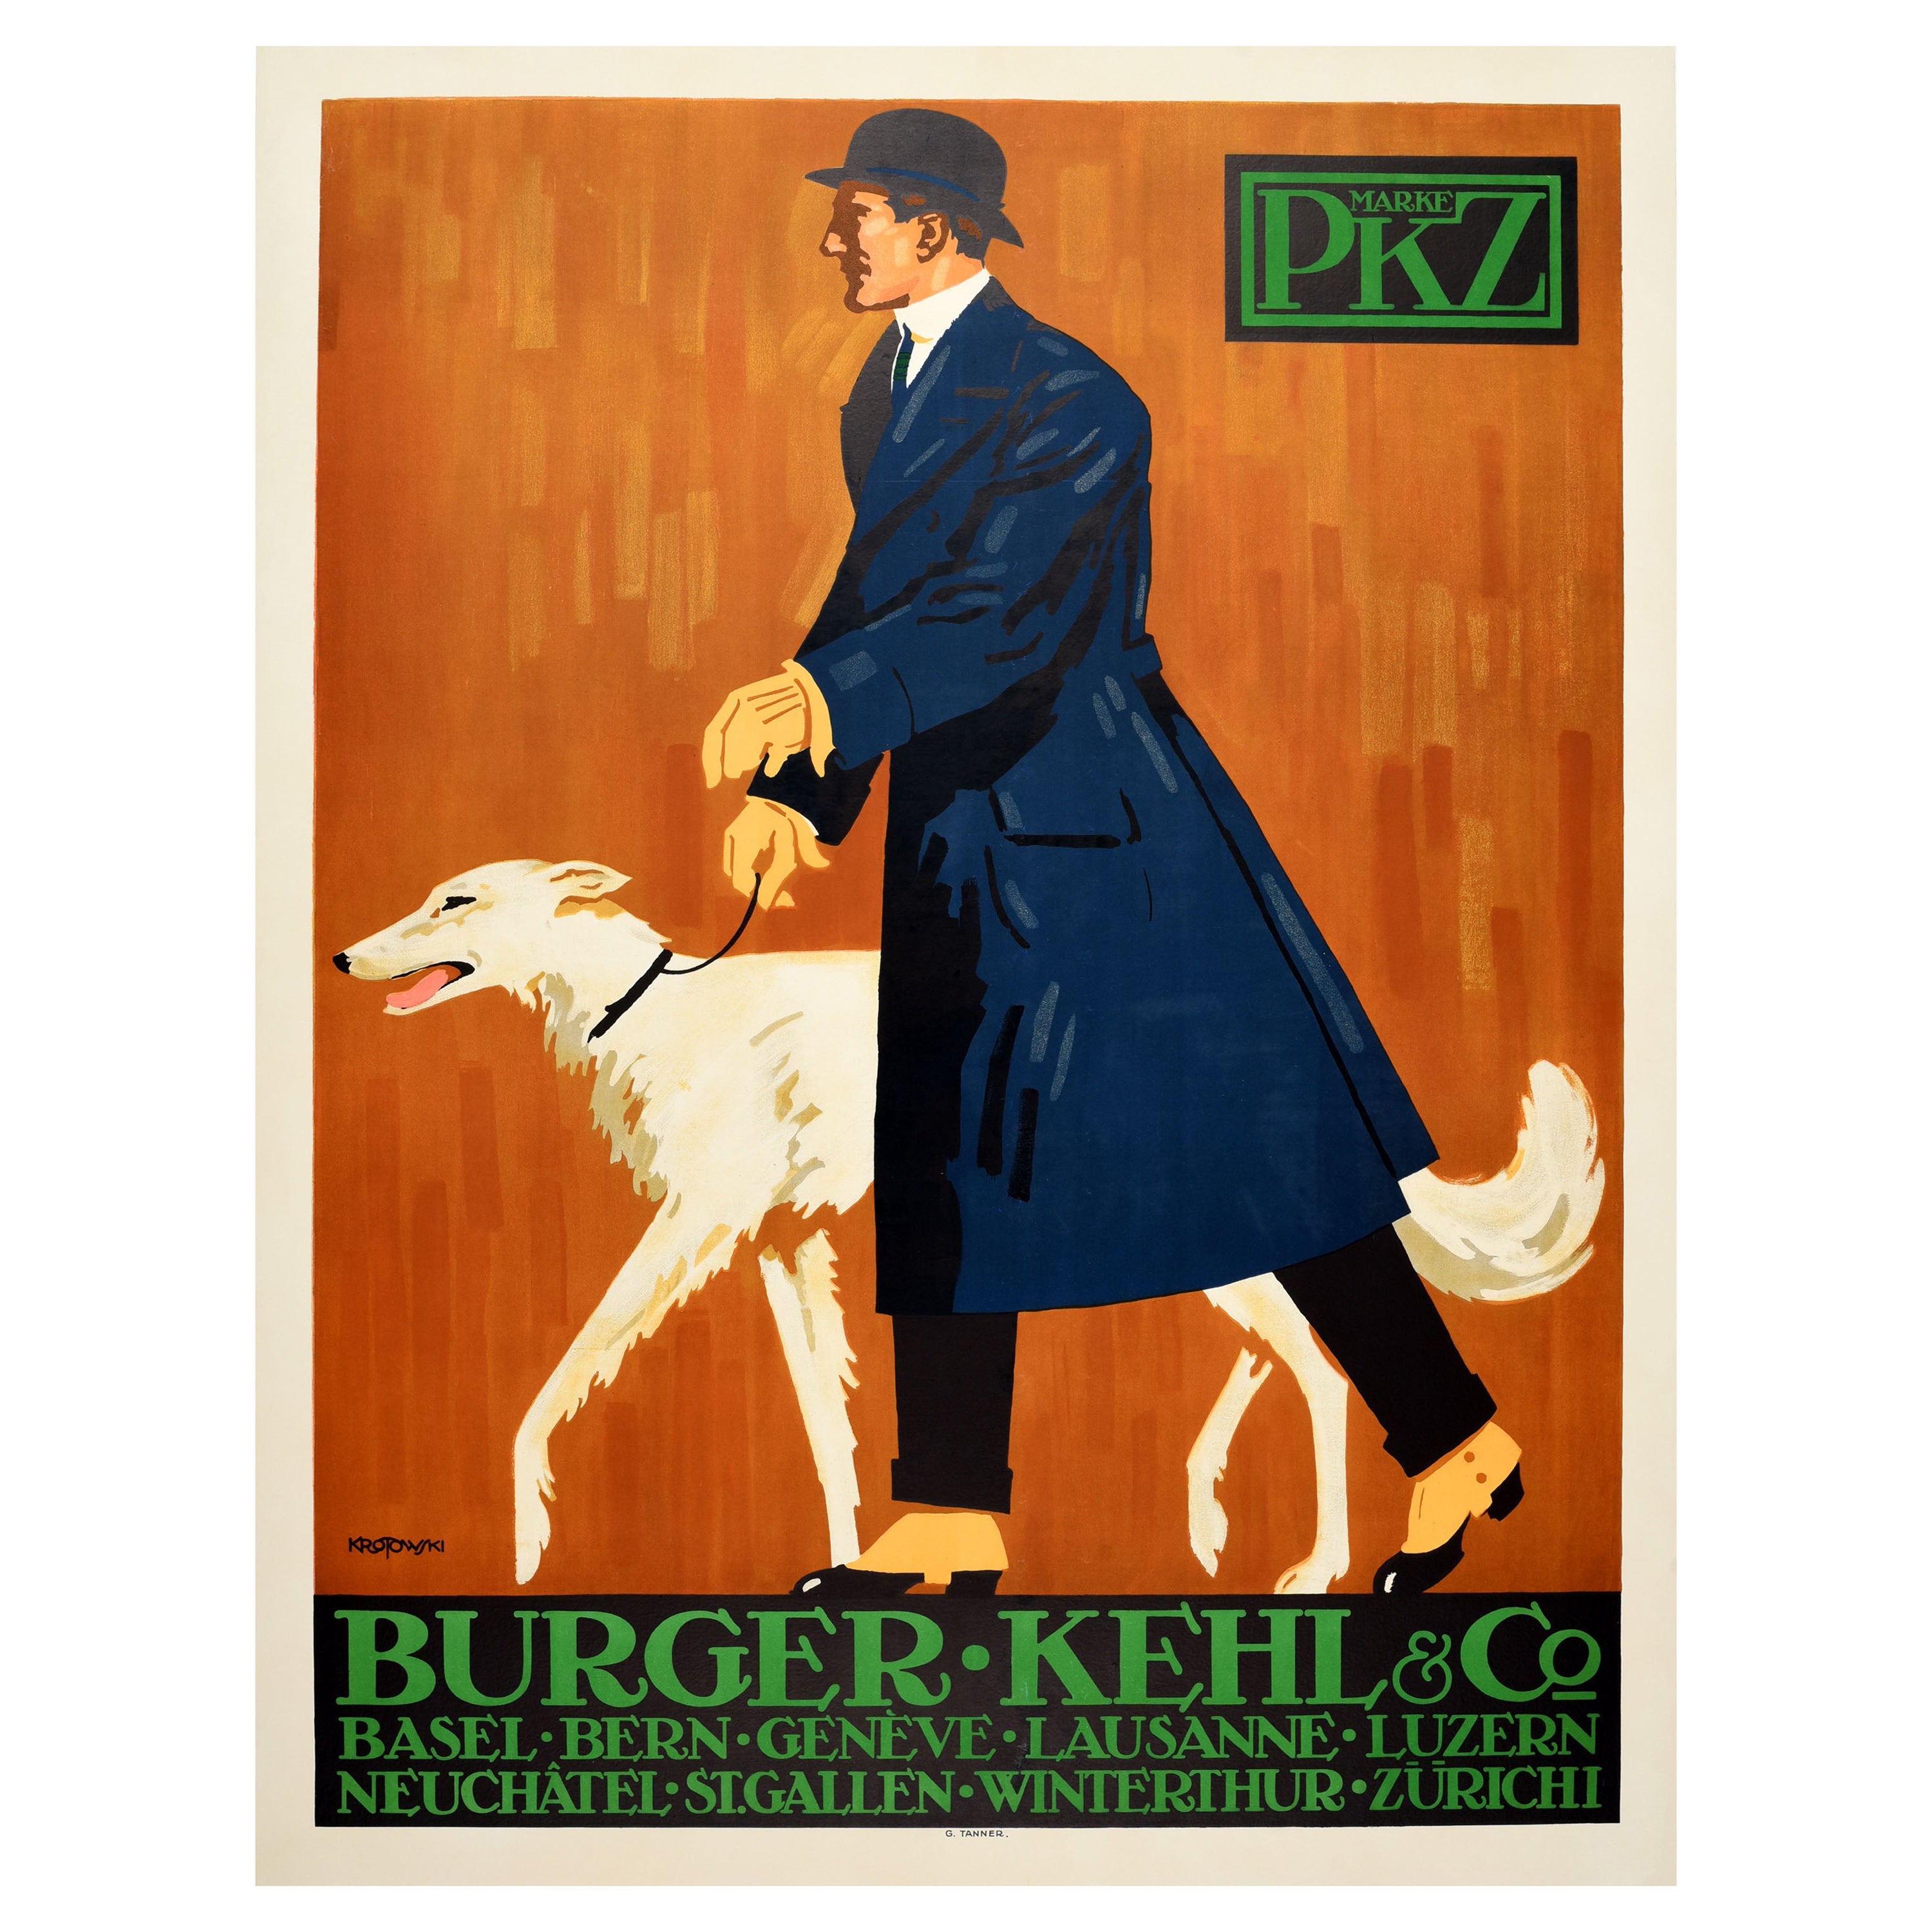 Original Antique Advertising Poster PKZ Burger Kehl & Co Men's Fashion Design For Sale